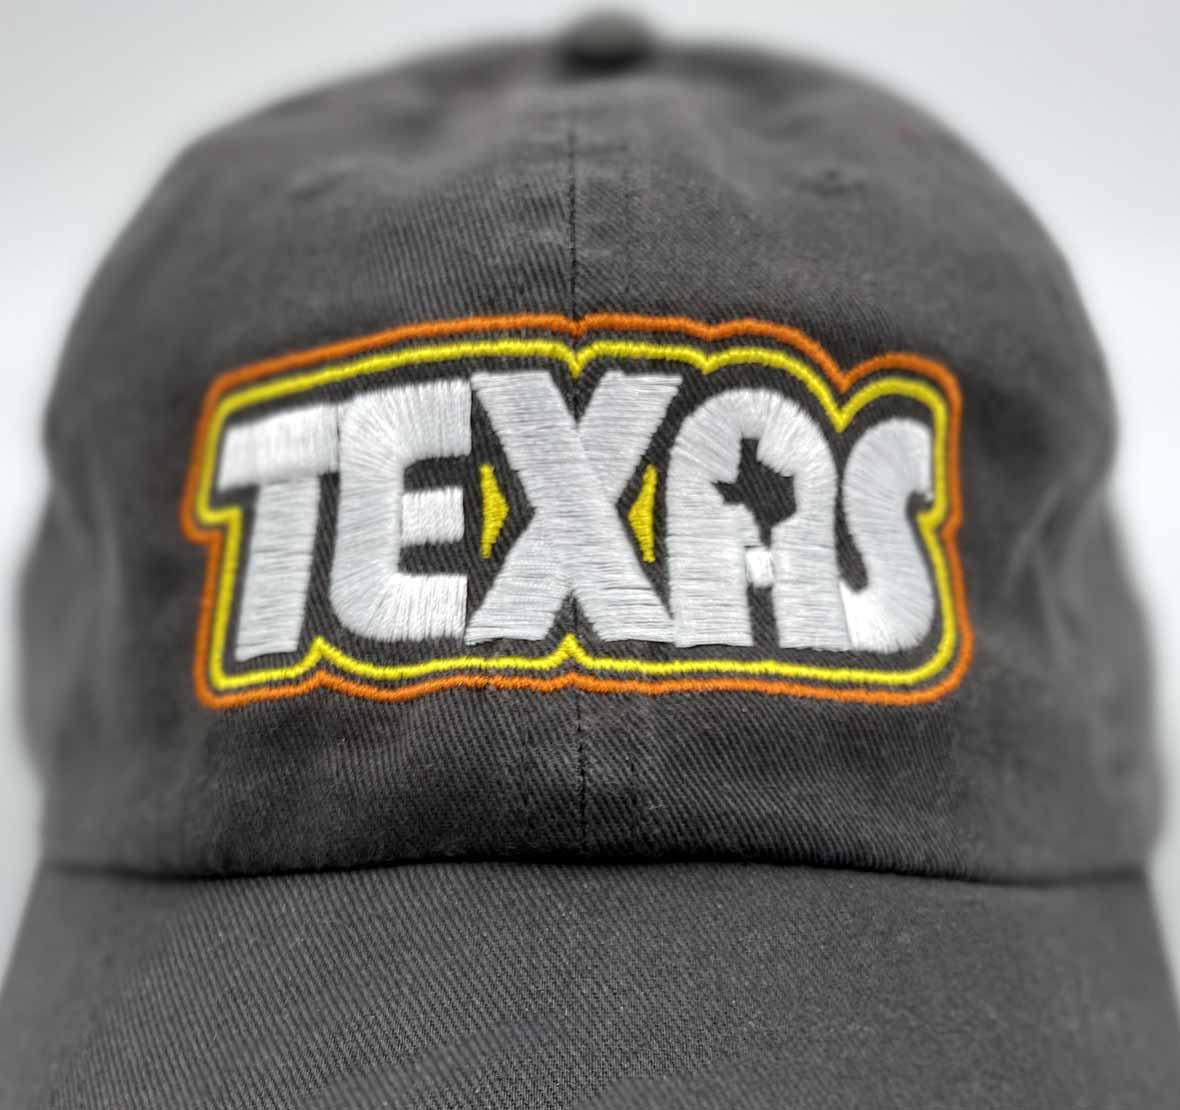 Retro Texas Dad Hat - Texas Hat, Austin Texas, Texas cap, texas hat